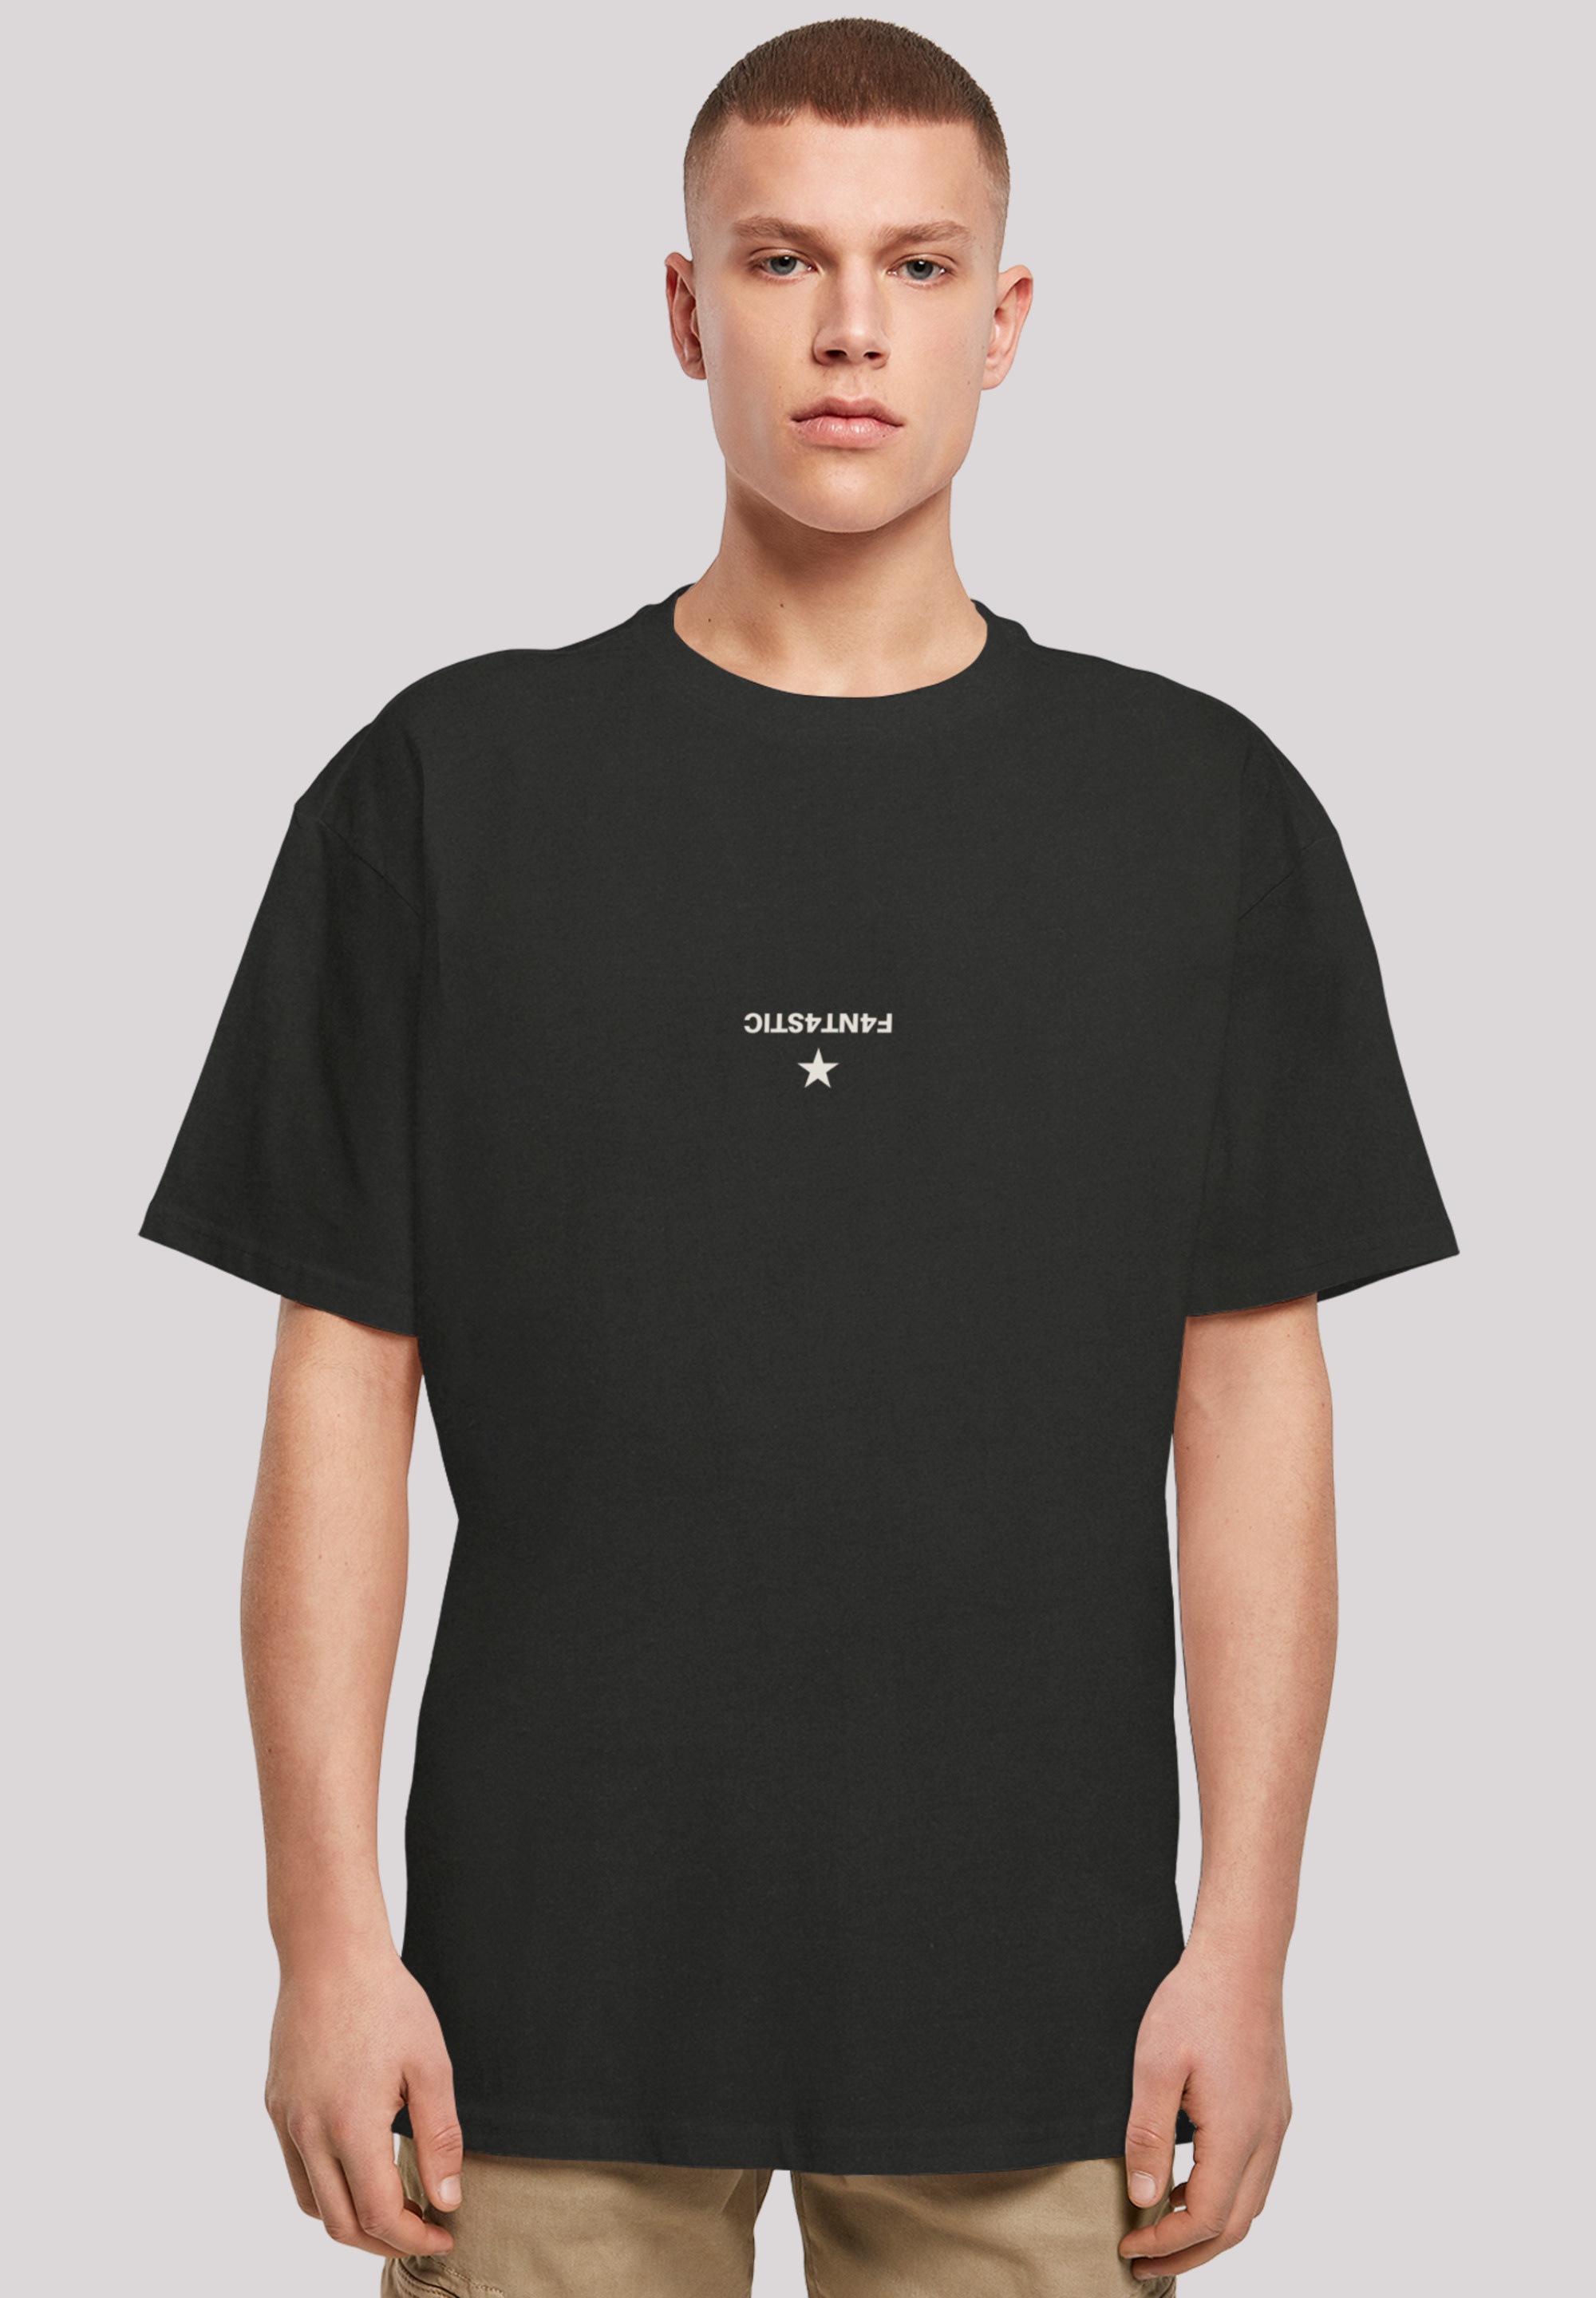 F4NT4STIC T-Shirt »Geometric Abstract«, Print